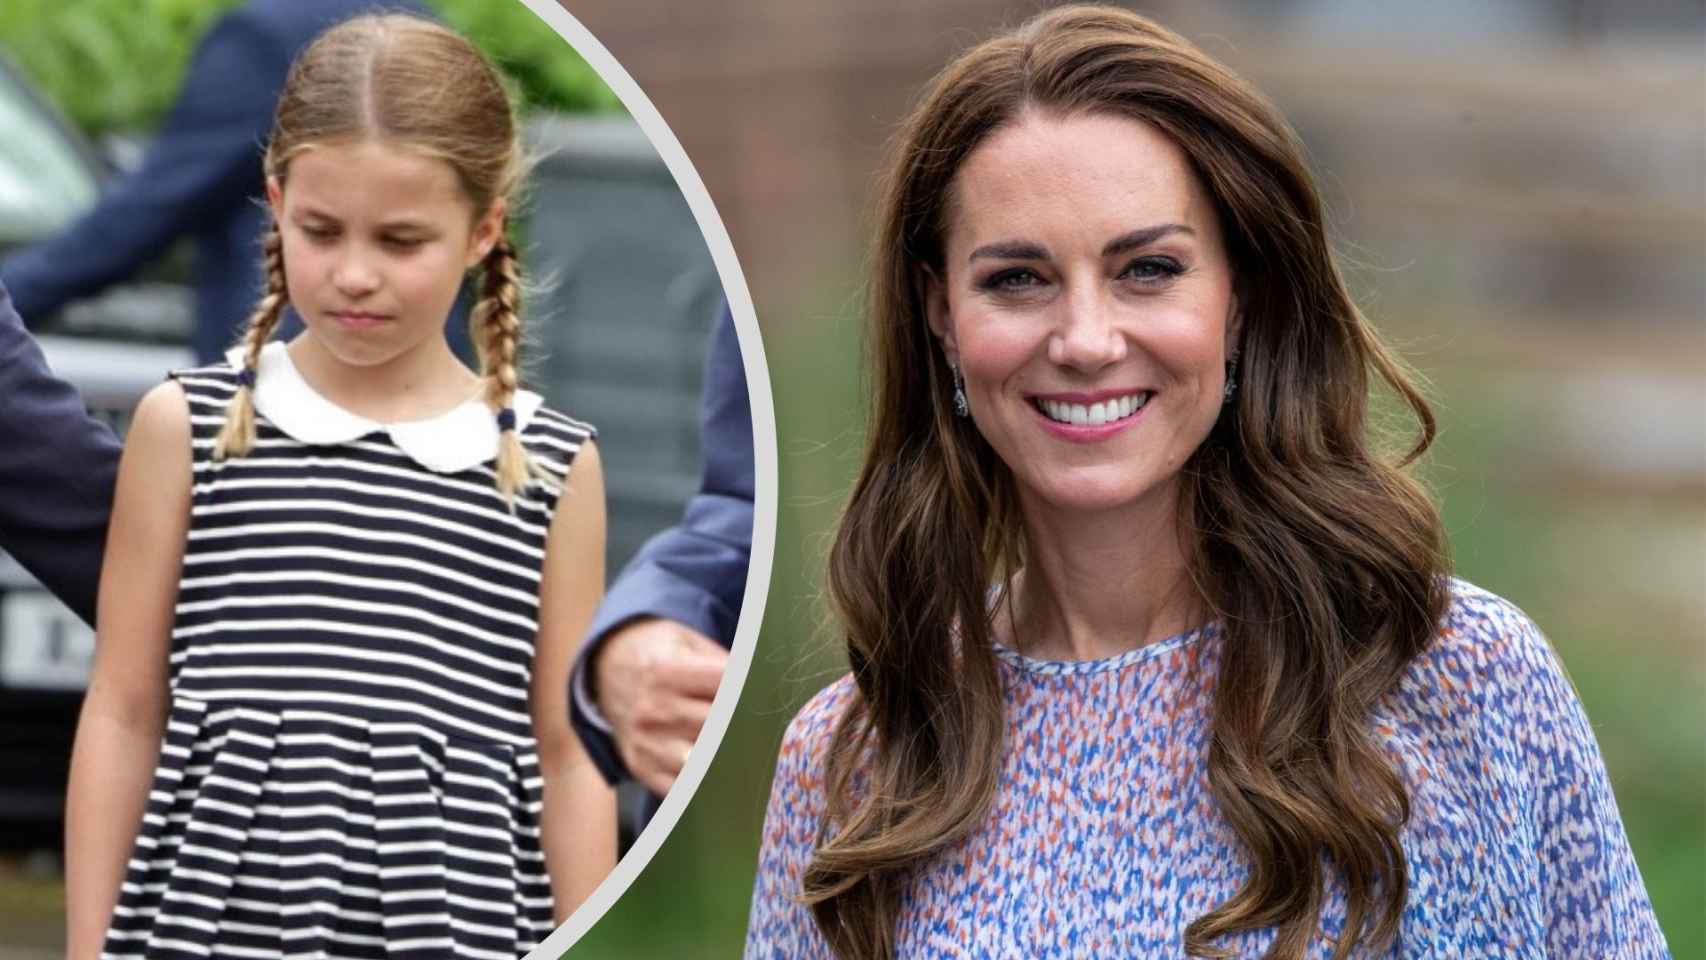 Los 'looks royal' de la semana: de las bailarinas más chic de Kate Middleton a las sandalias españolas de su hija Charlotte